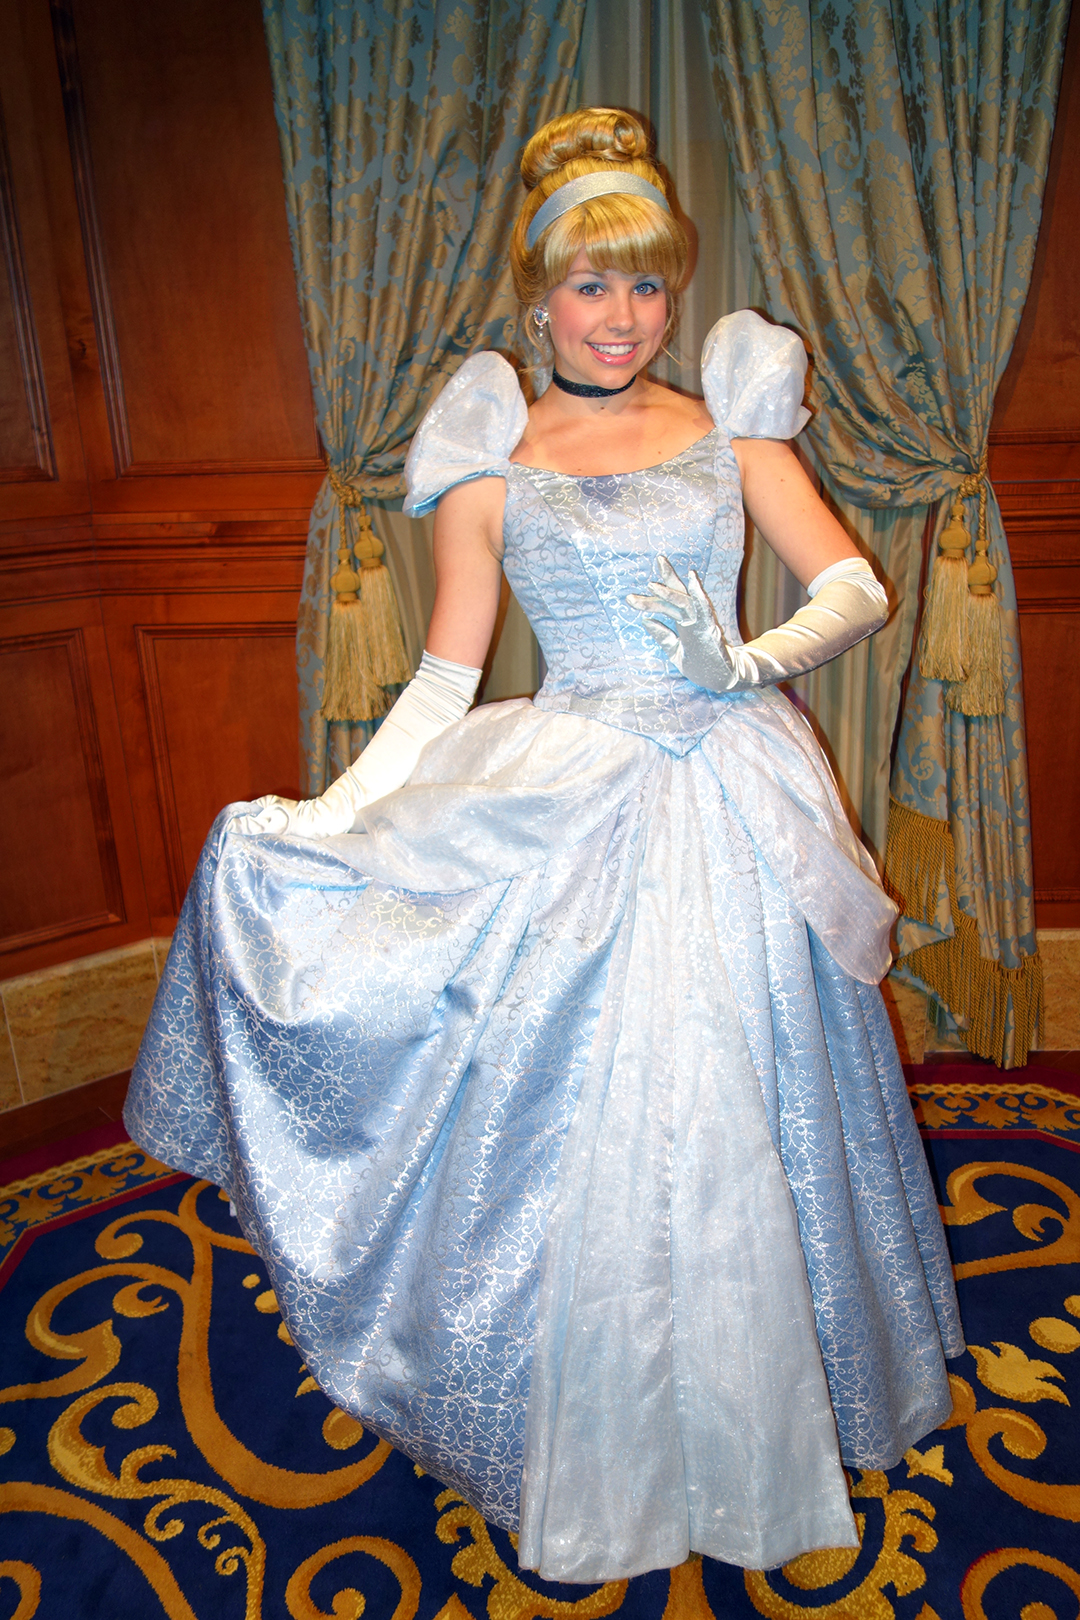 Cinderella at Princess Fairytale Hall in Magic Kingdom at Disney World